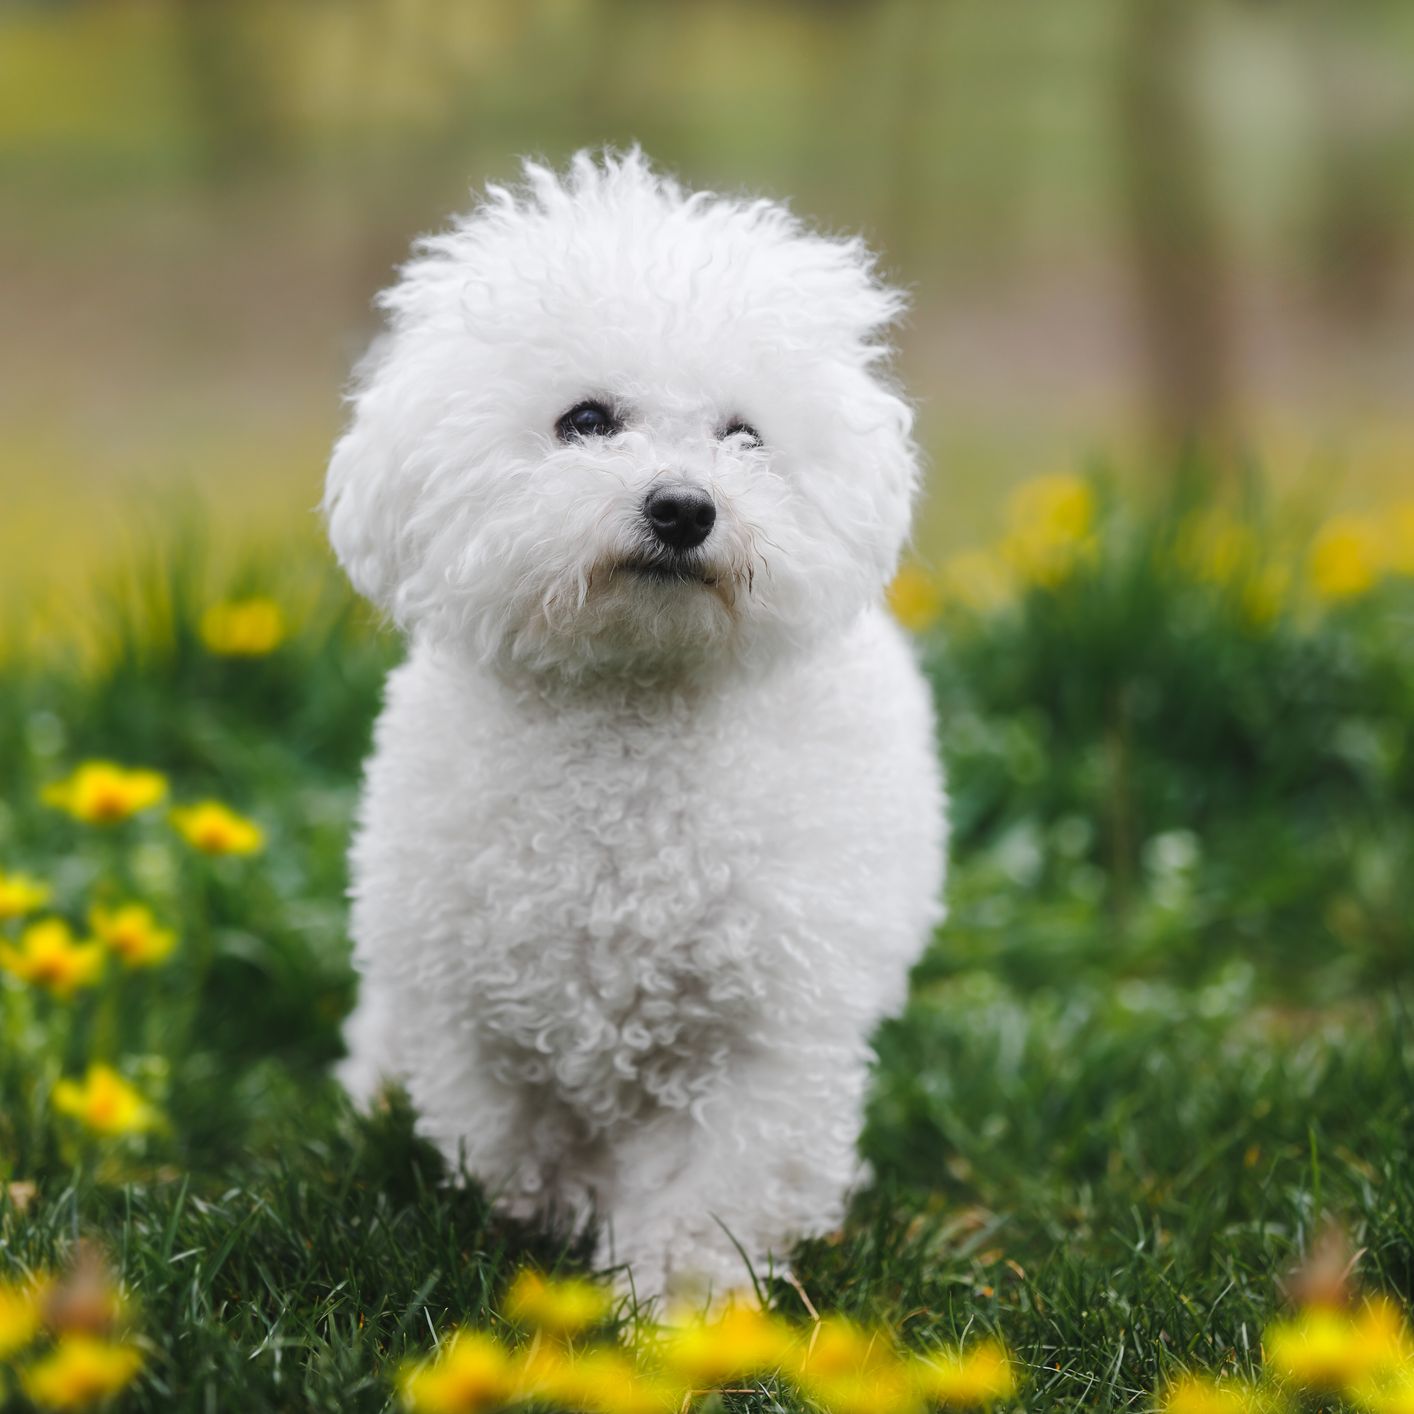 cute fluffy white dog